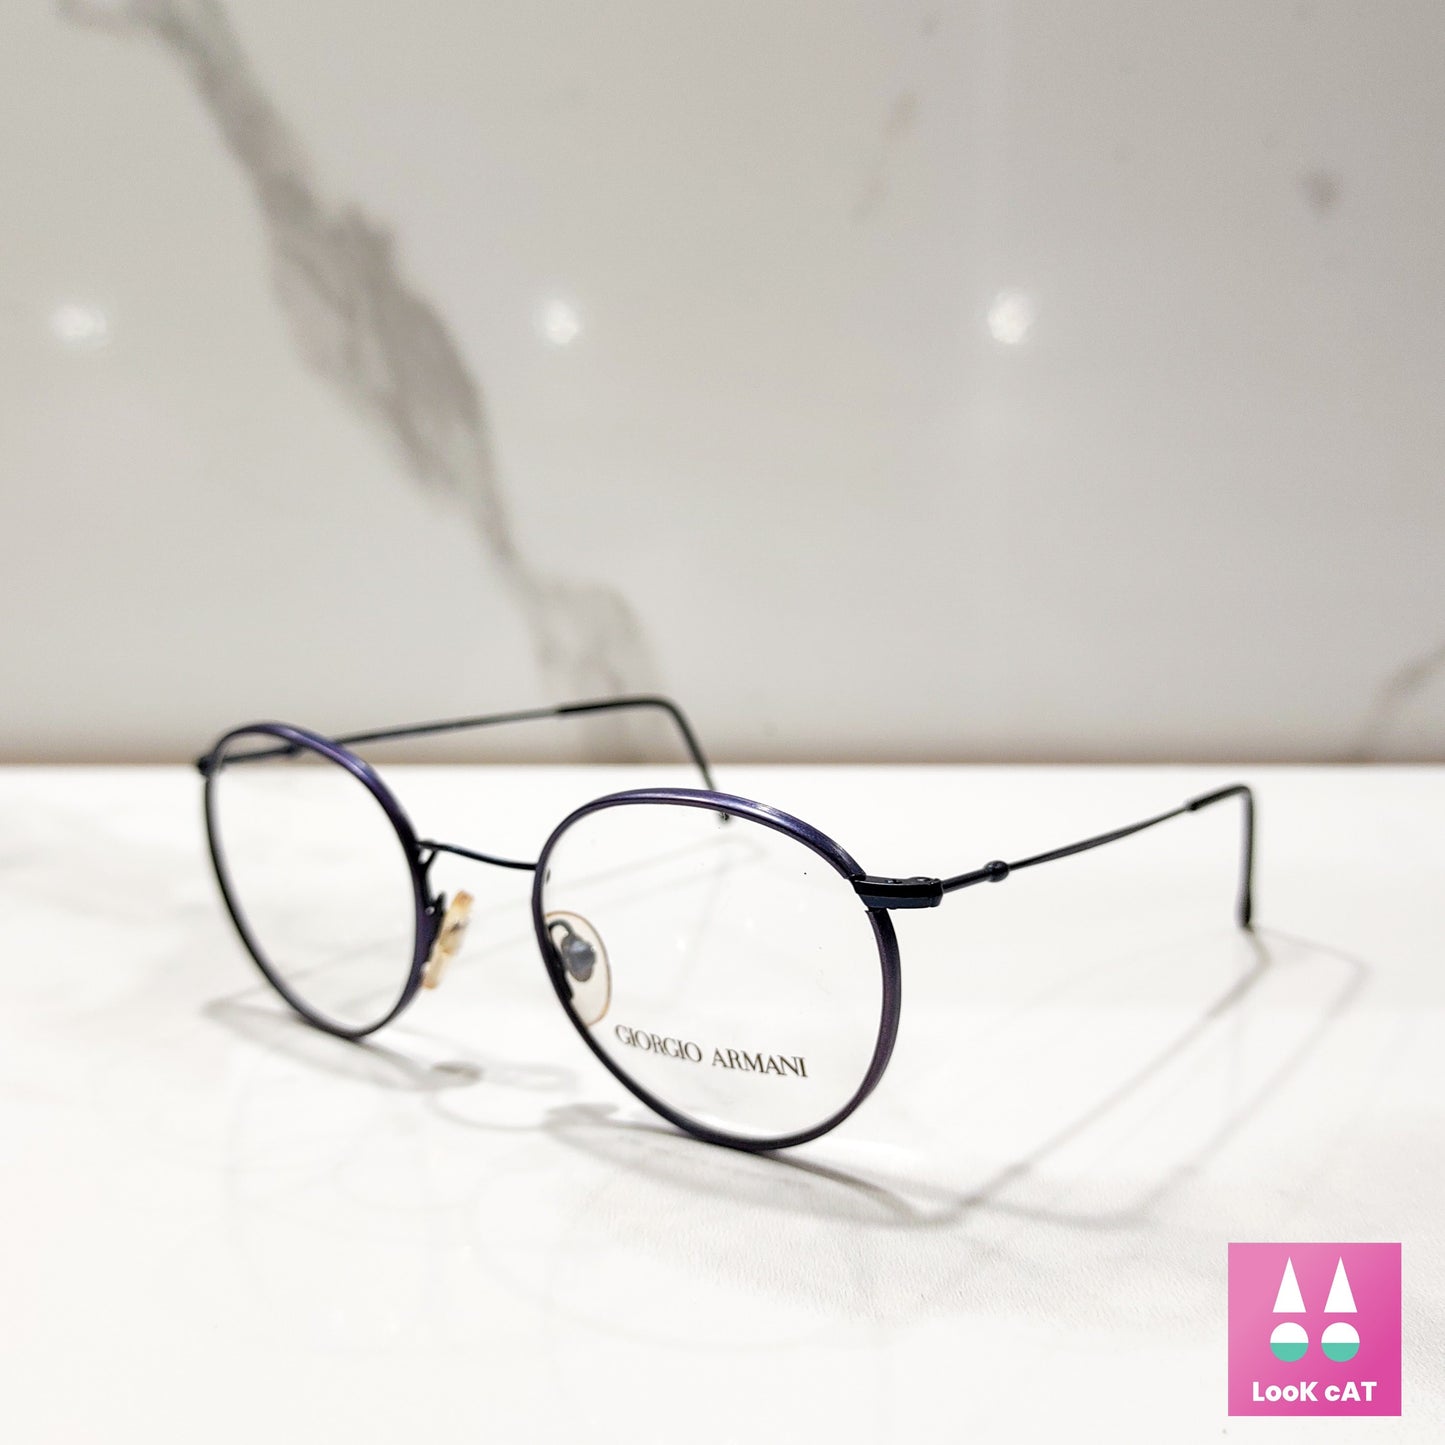 Giorgio Armani 253 eyeframe occhiali da vista lunetta tonalità brille pantos occhiali vintage anni '90 made in Italy